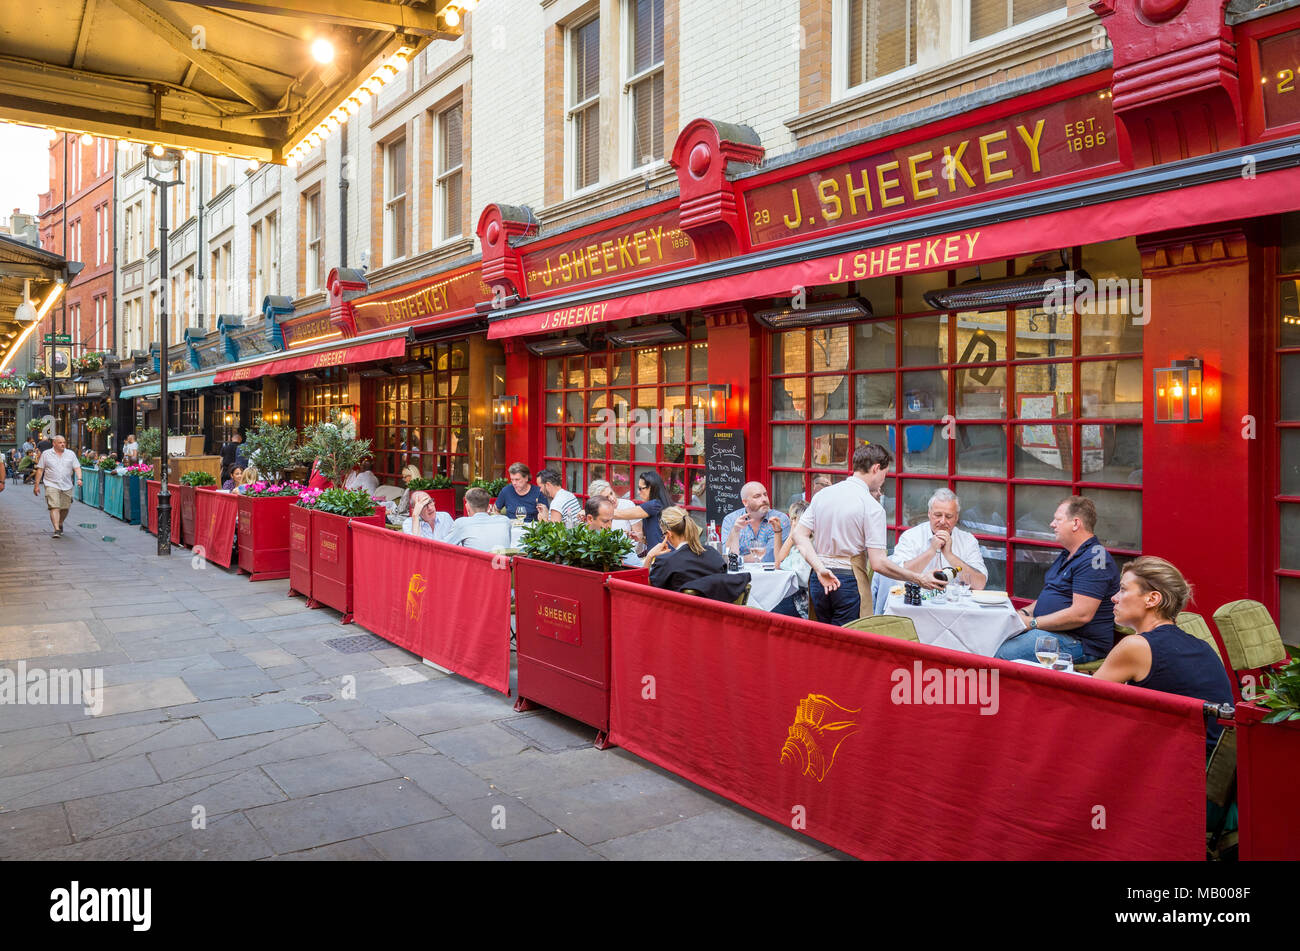 J Sheekey restaurant, London, UK Stock Photo